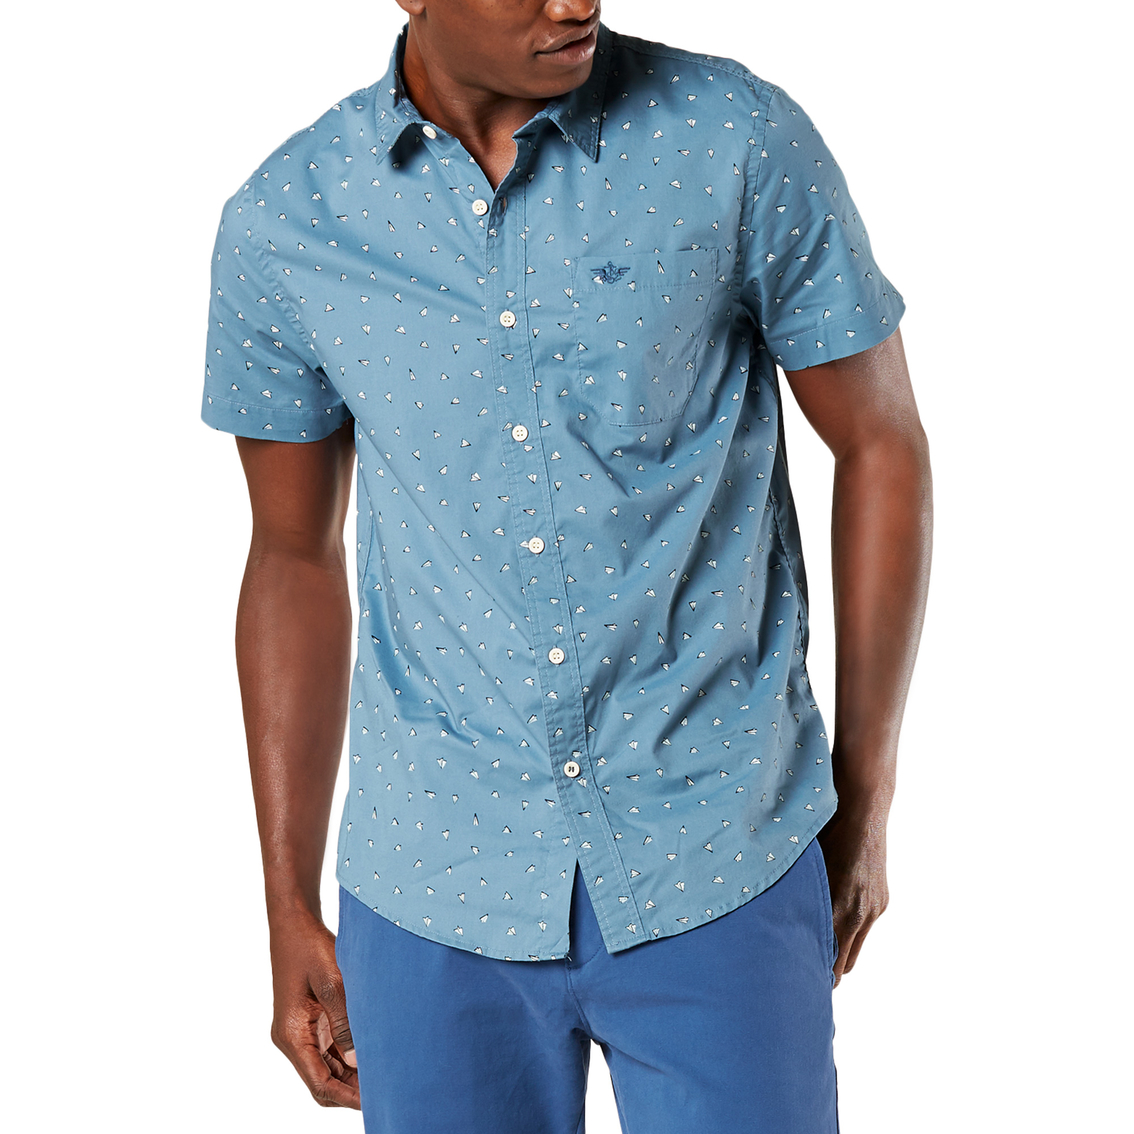 Dockers No Tuck Needed Original Button Up Shirt | Shirts | Clothing ...